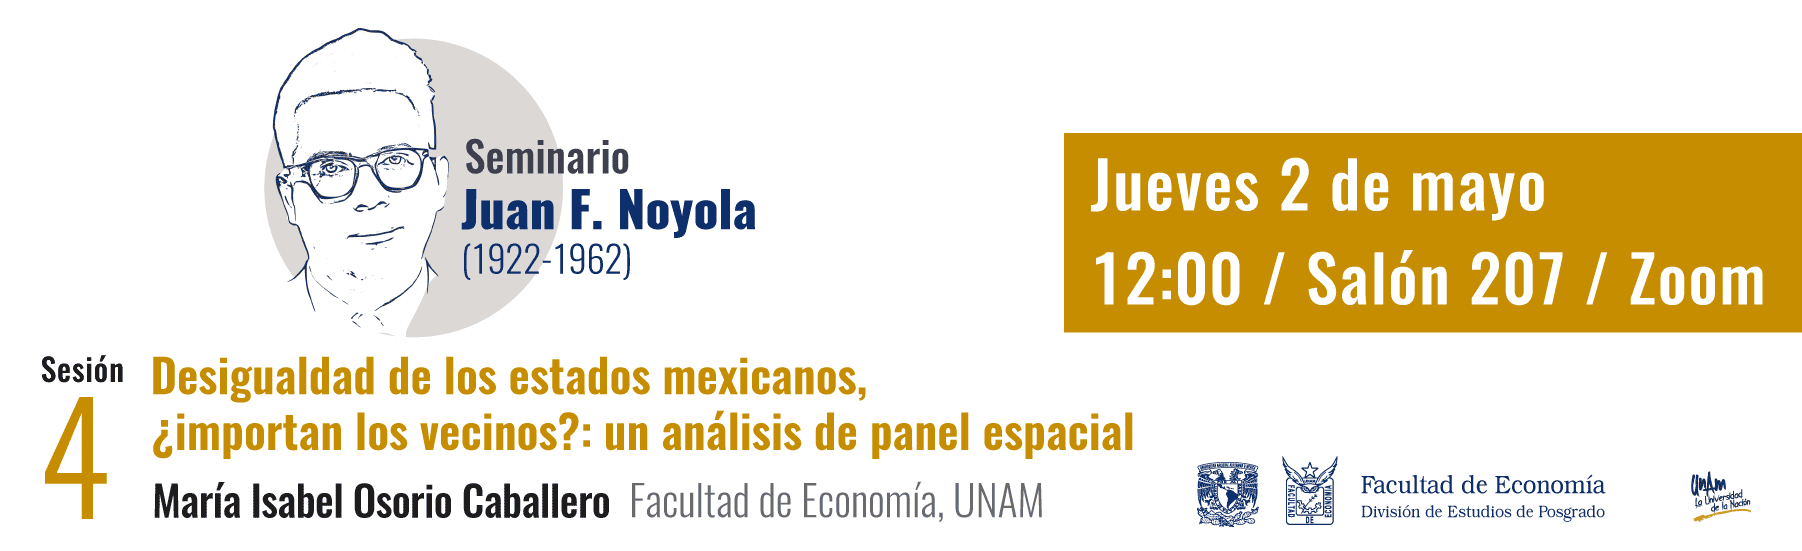 Seminario: Juan F. Noyola, sesión 4, 2 de mayo, 12:00 hrs., Salón 207, Zoom